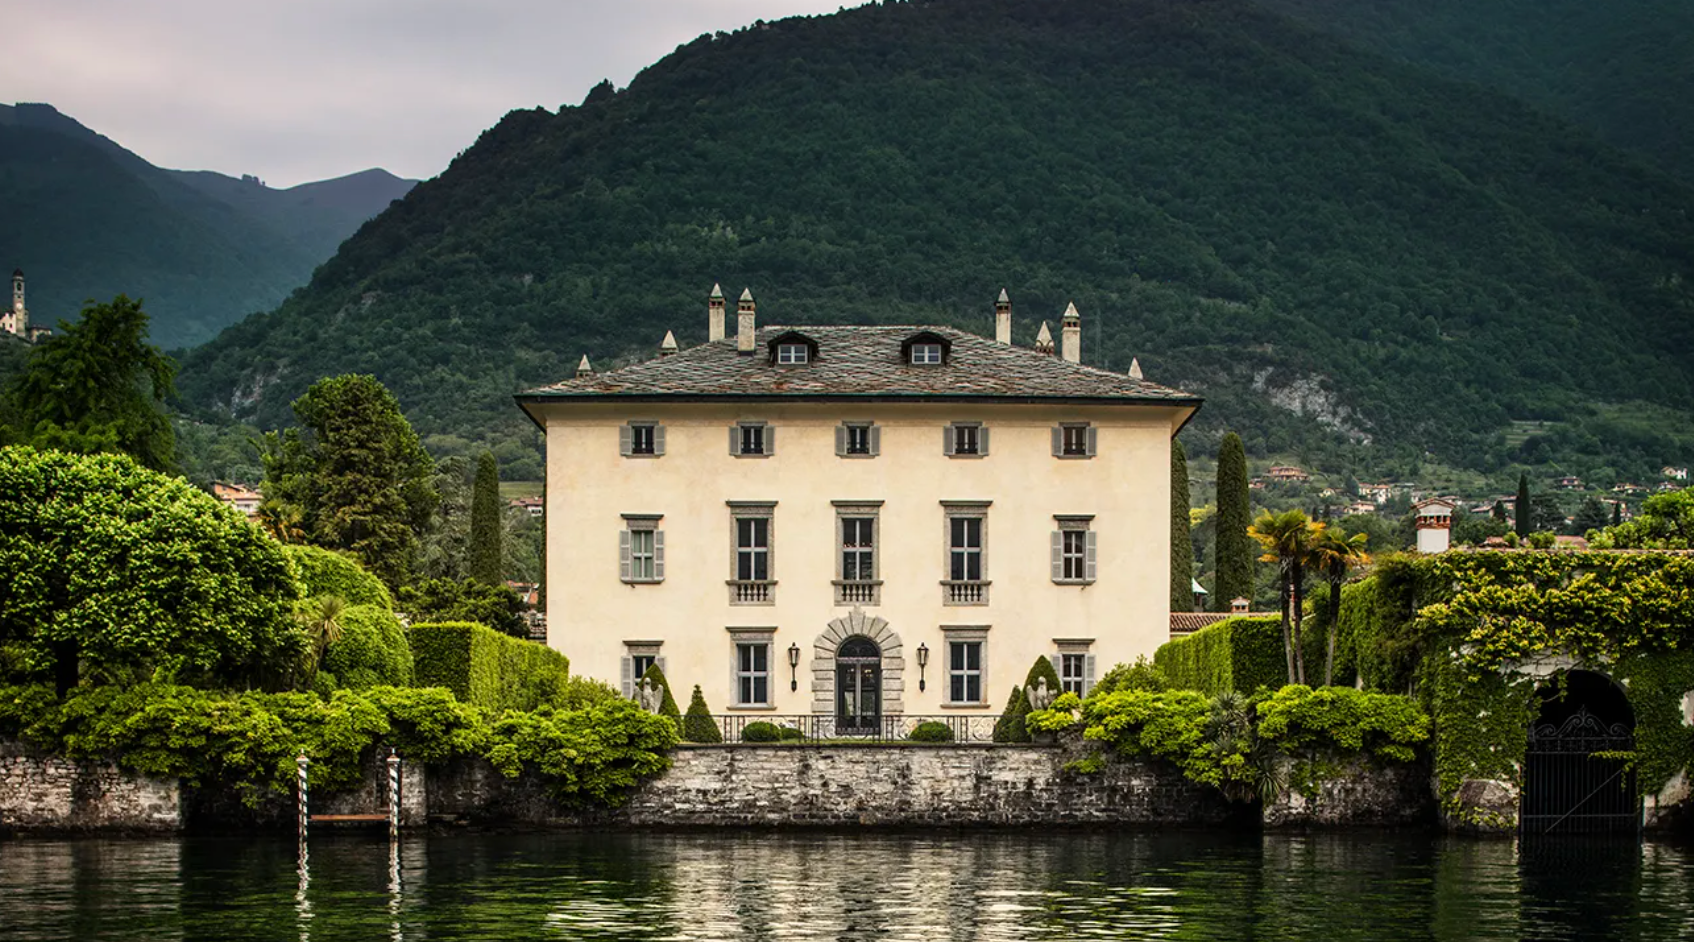 Villa Balbiano is based in Lake Como, Italy